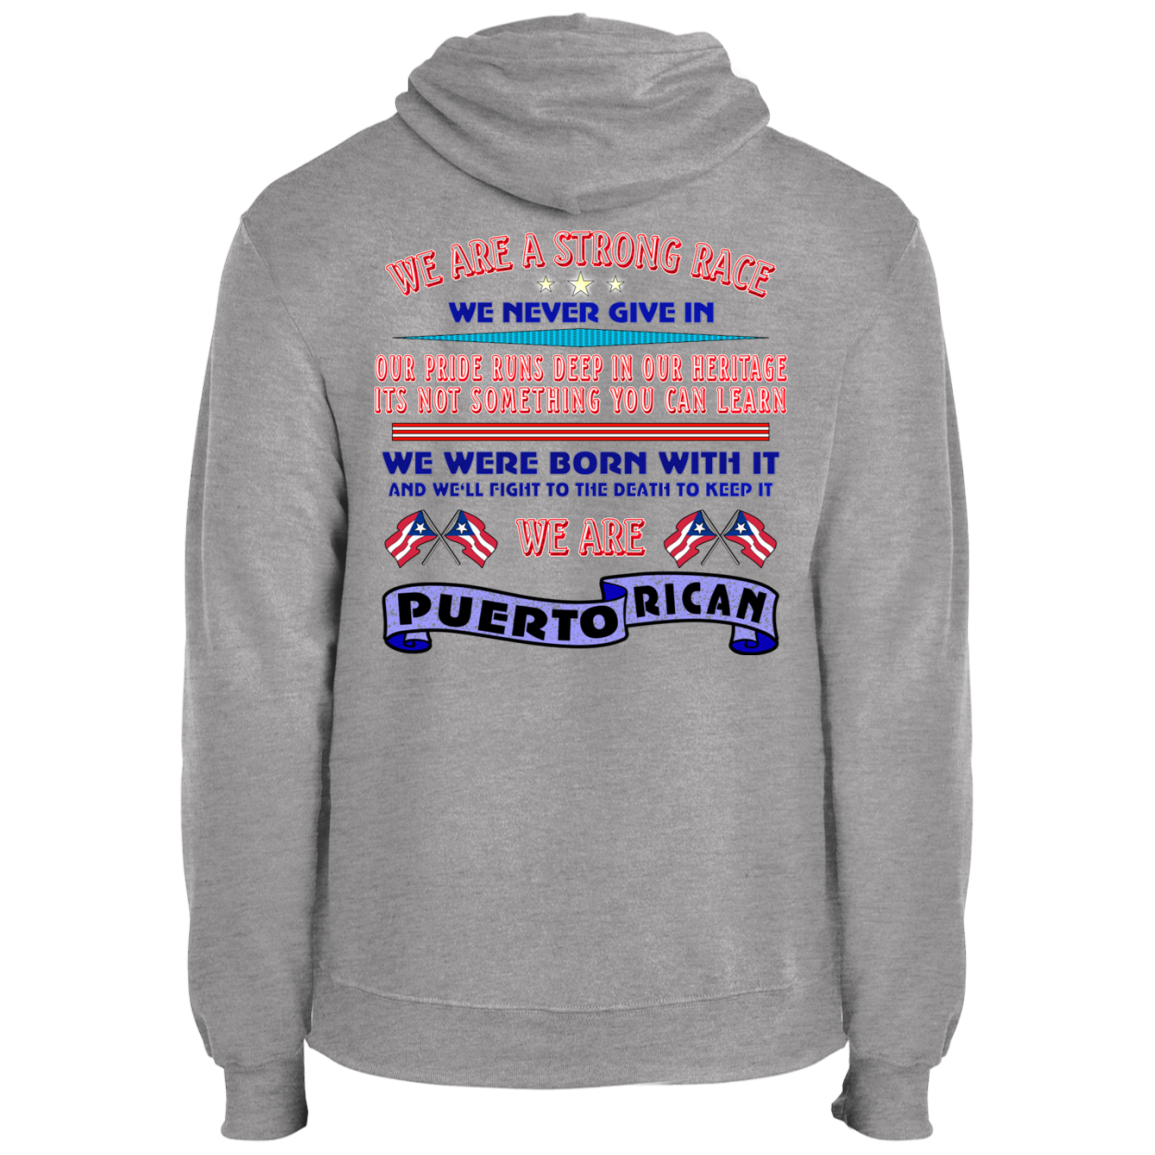 WE ARE Strong Core Fleece Pullover Hoodie - Puerto Rican Pride